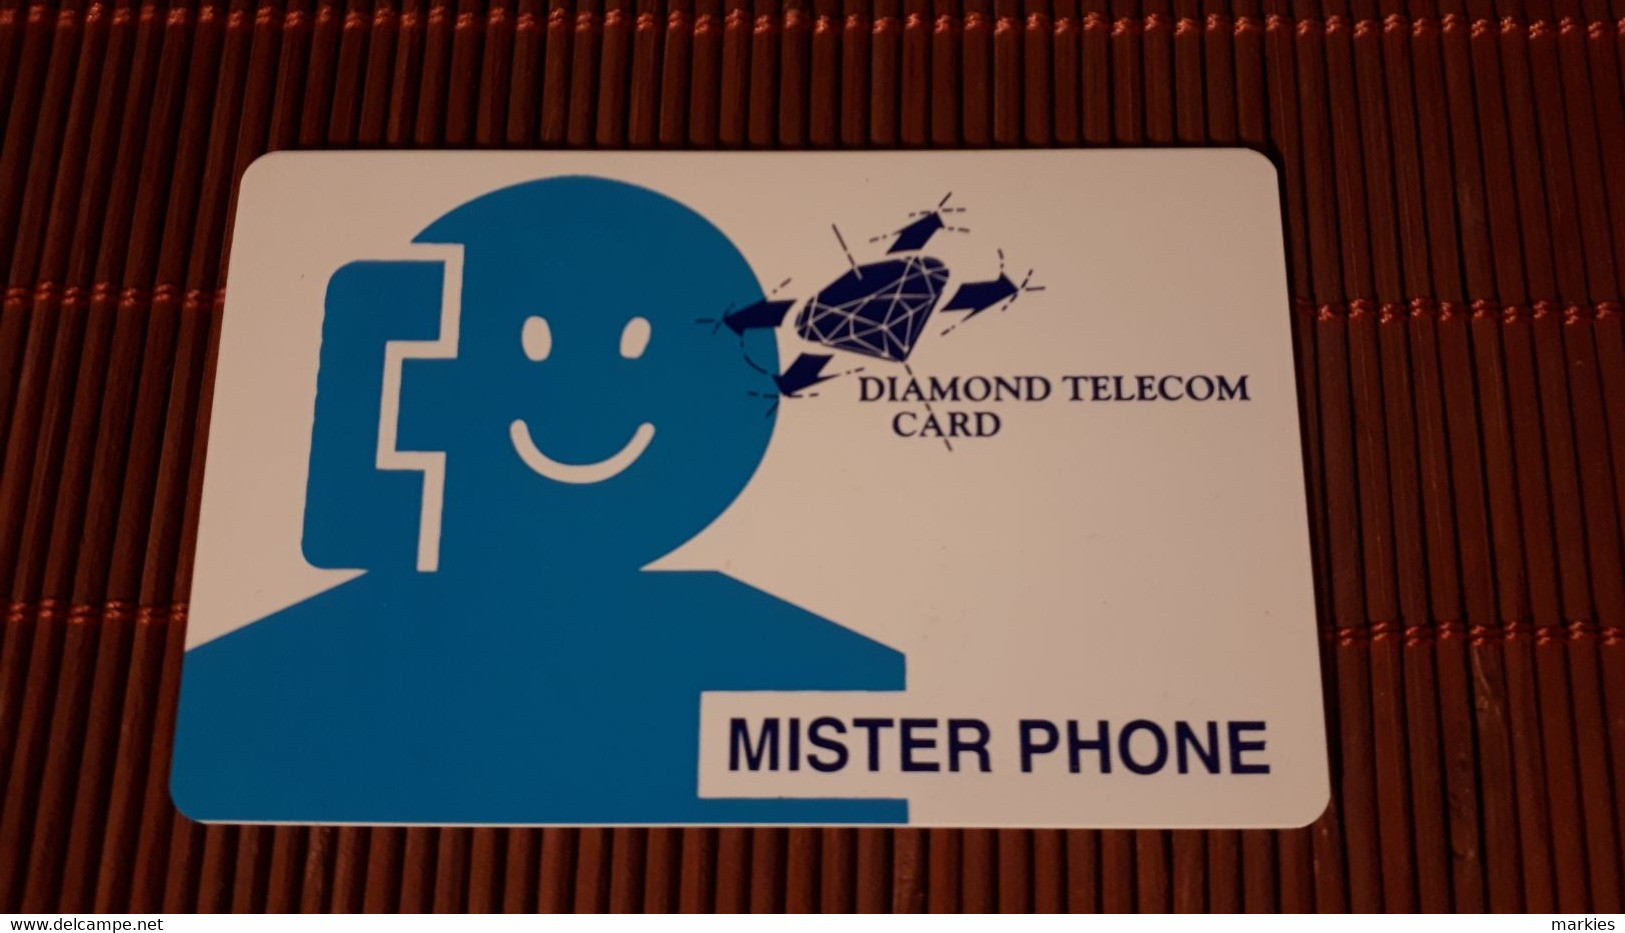 Diamond Telecom 1 Prepaidcard Mister Phone (Mint,New) Expiry Dat 31-1-97  Rare - Unknown Origin